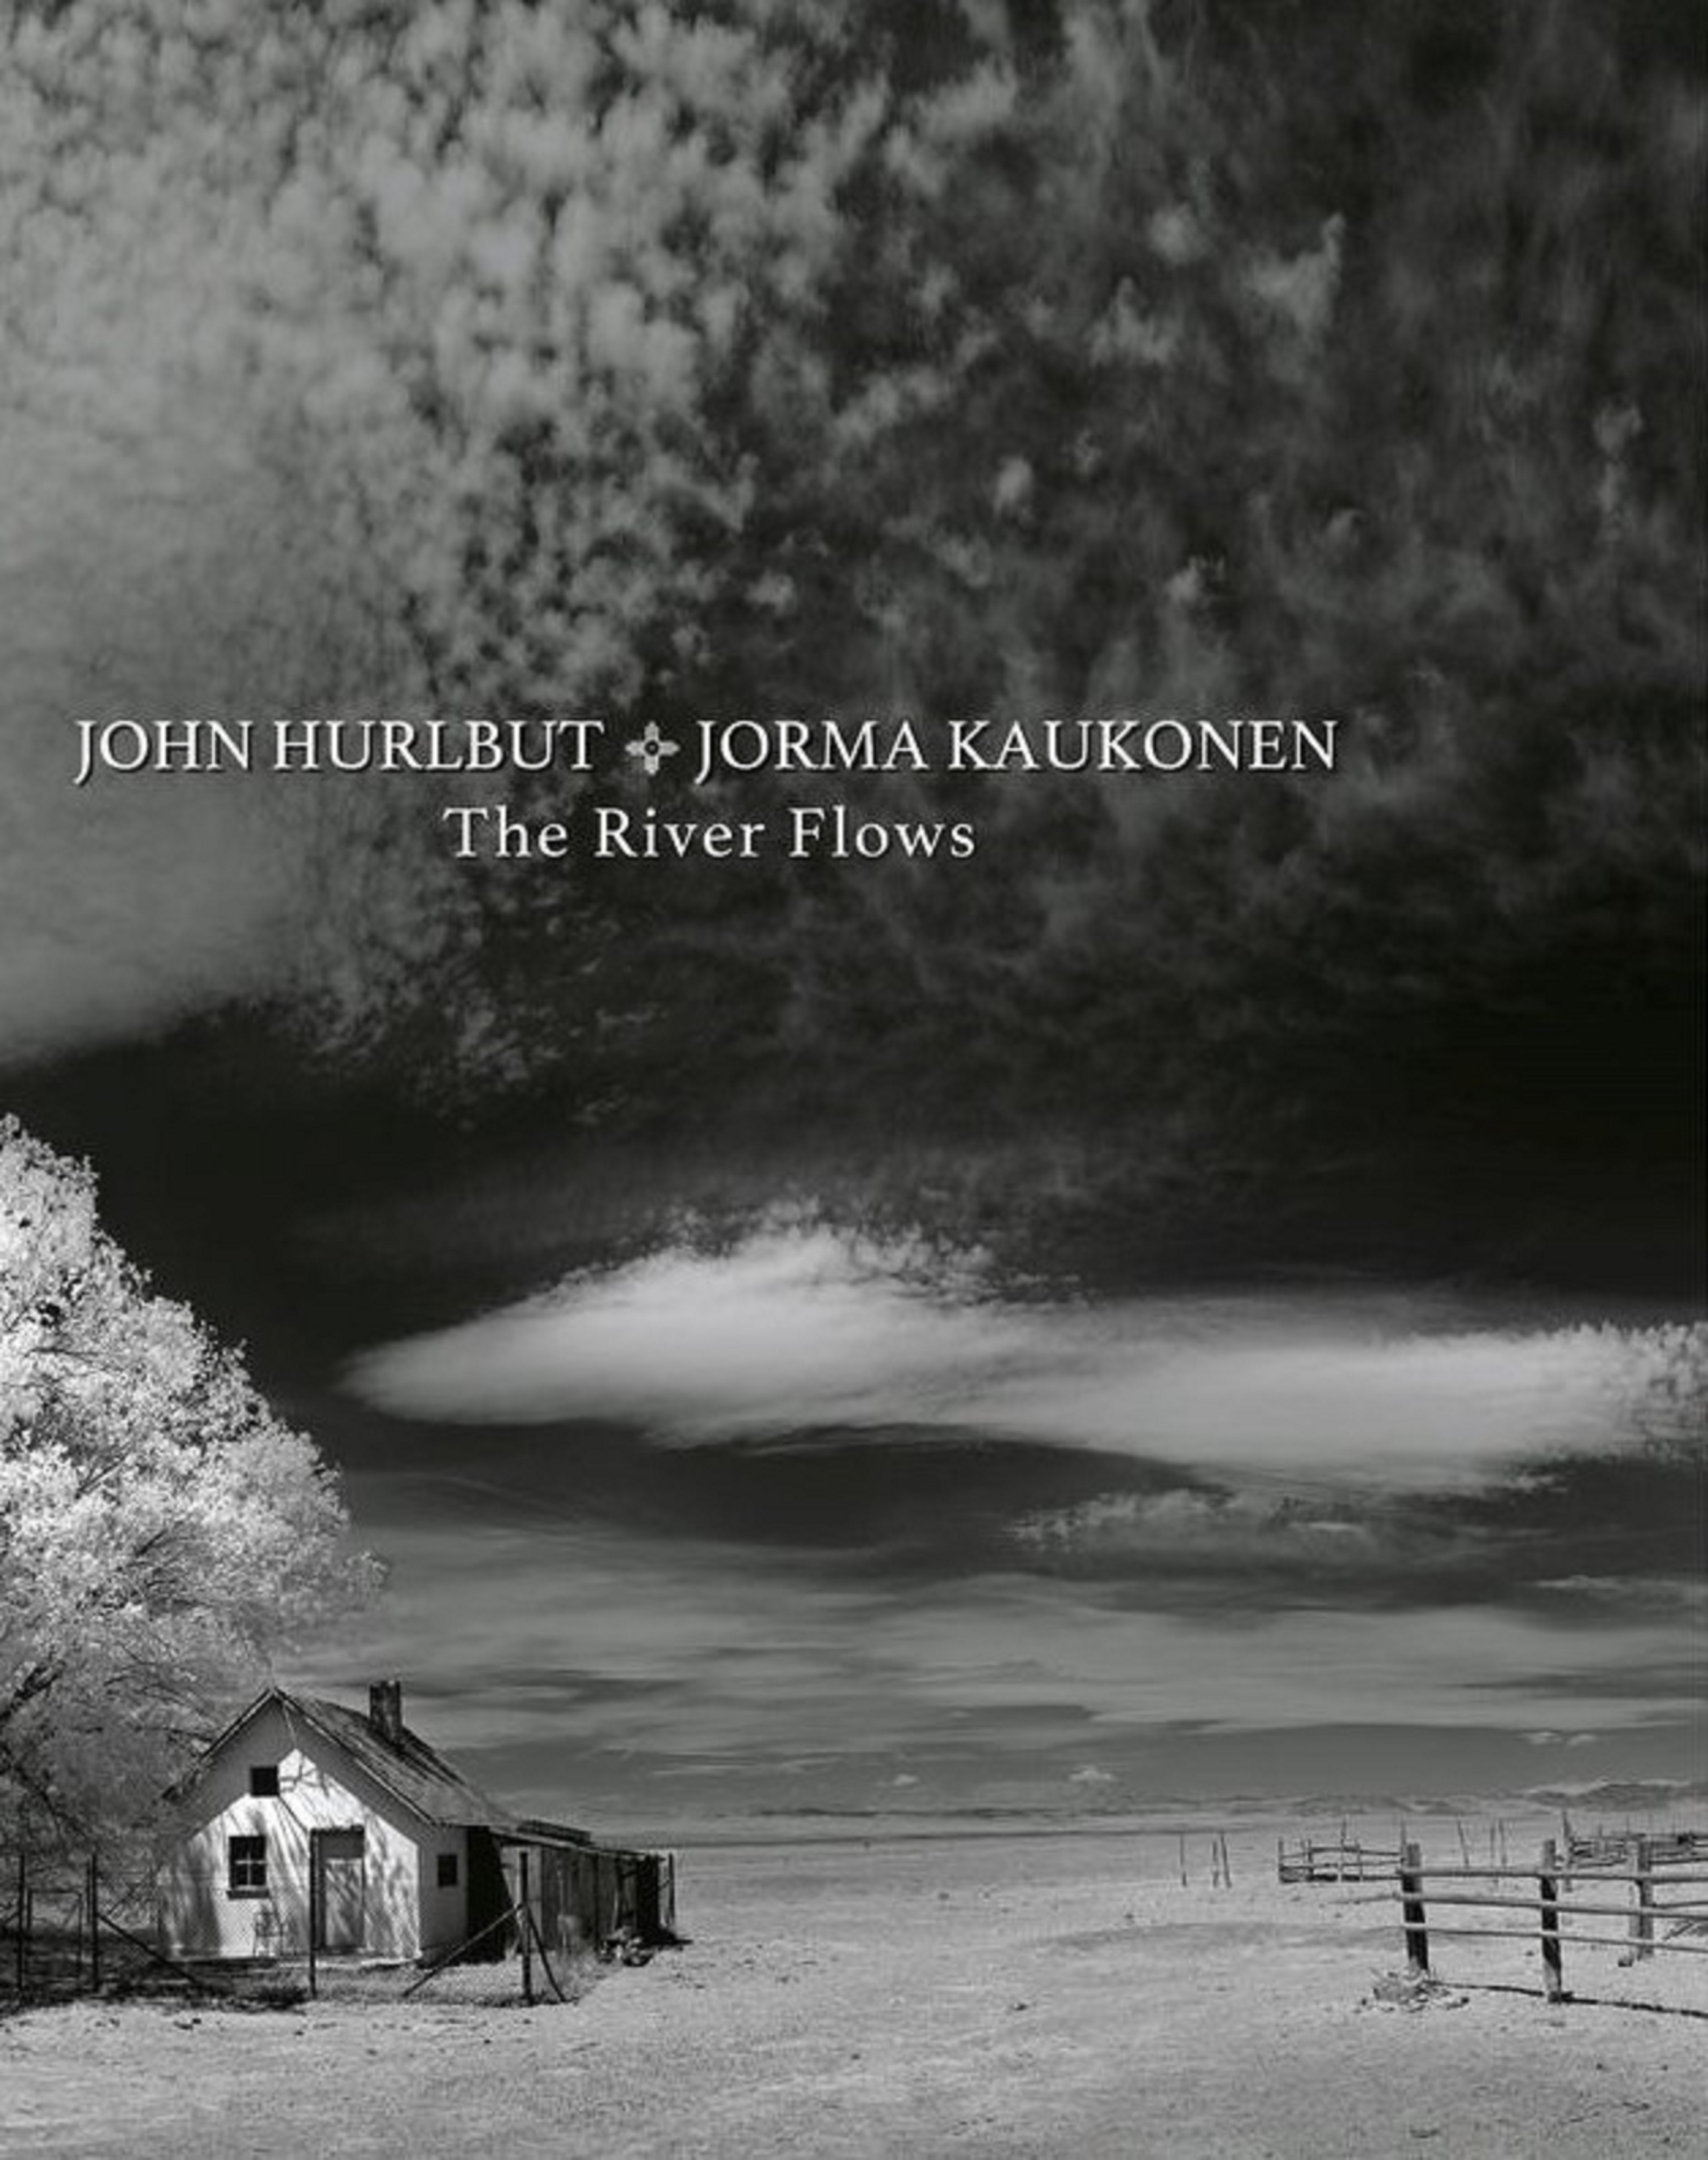 John Hurlbut & Jorma Kaukonen | The River Flows | Review